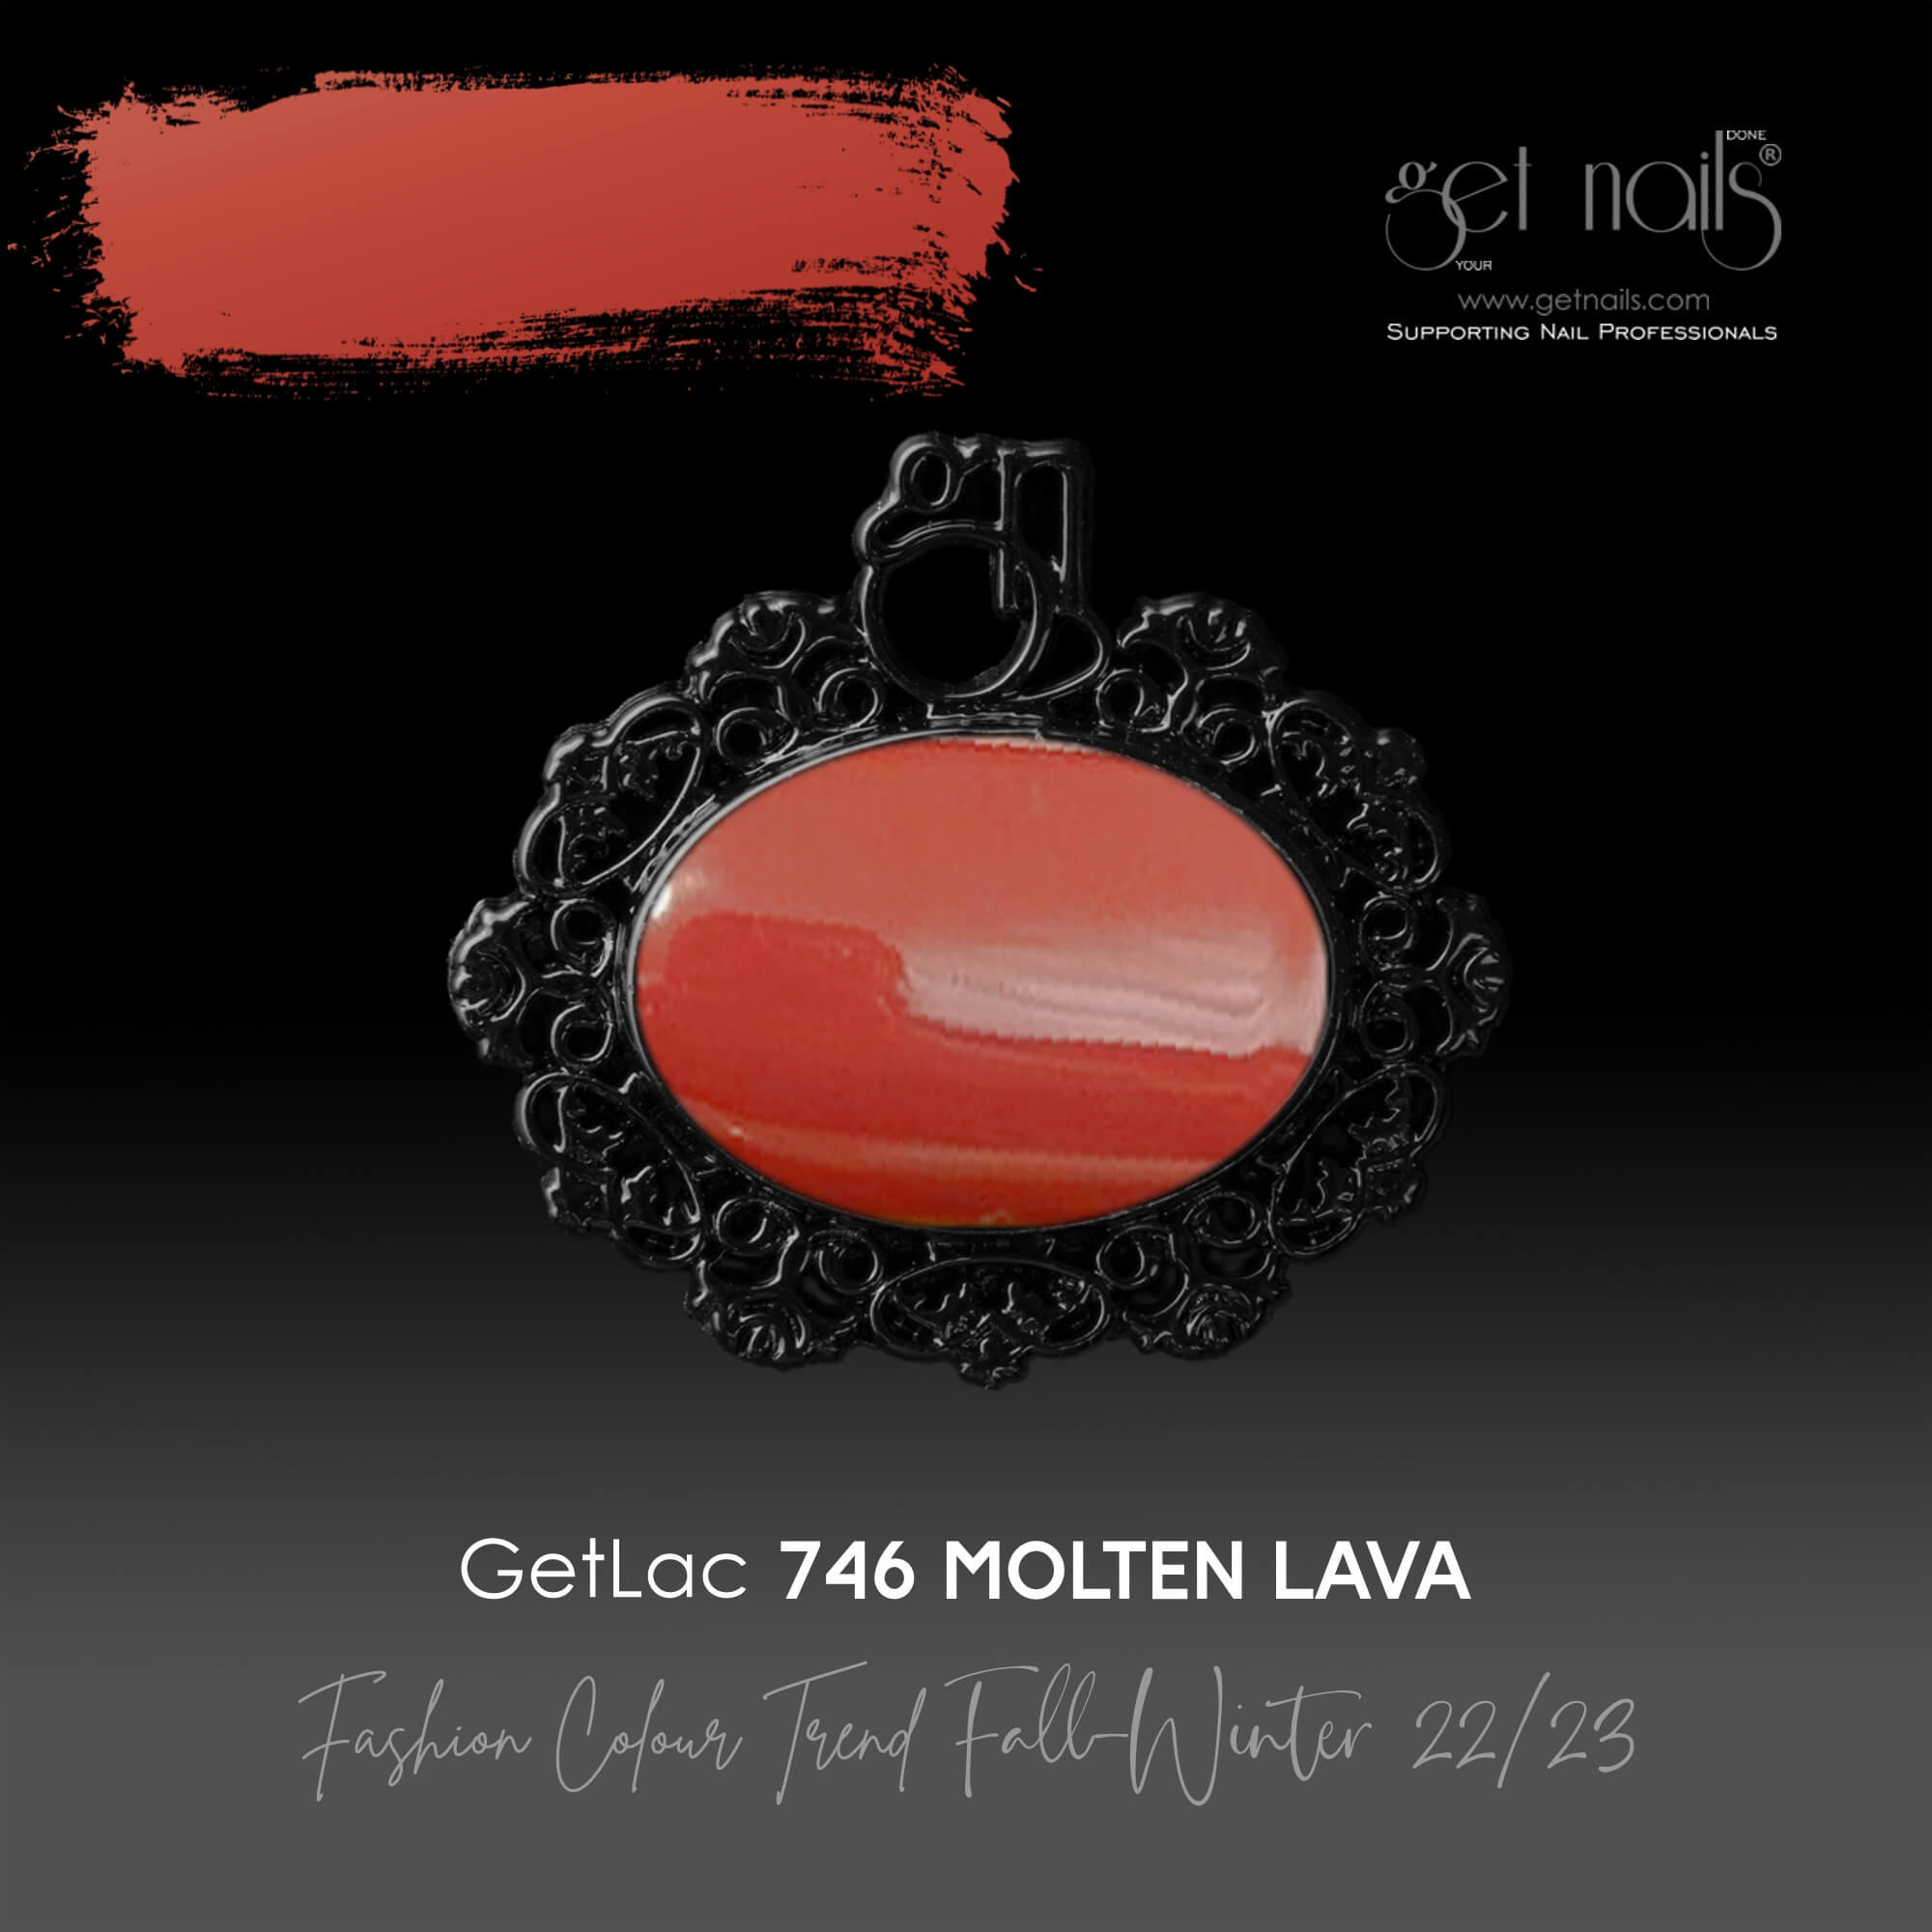 Get Nails Austria - GetLac 746 Molten Lava 15g